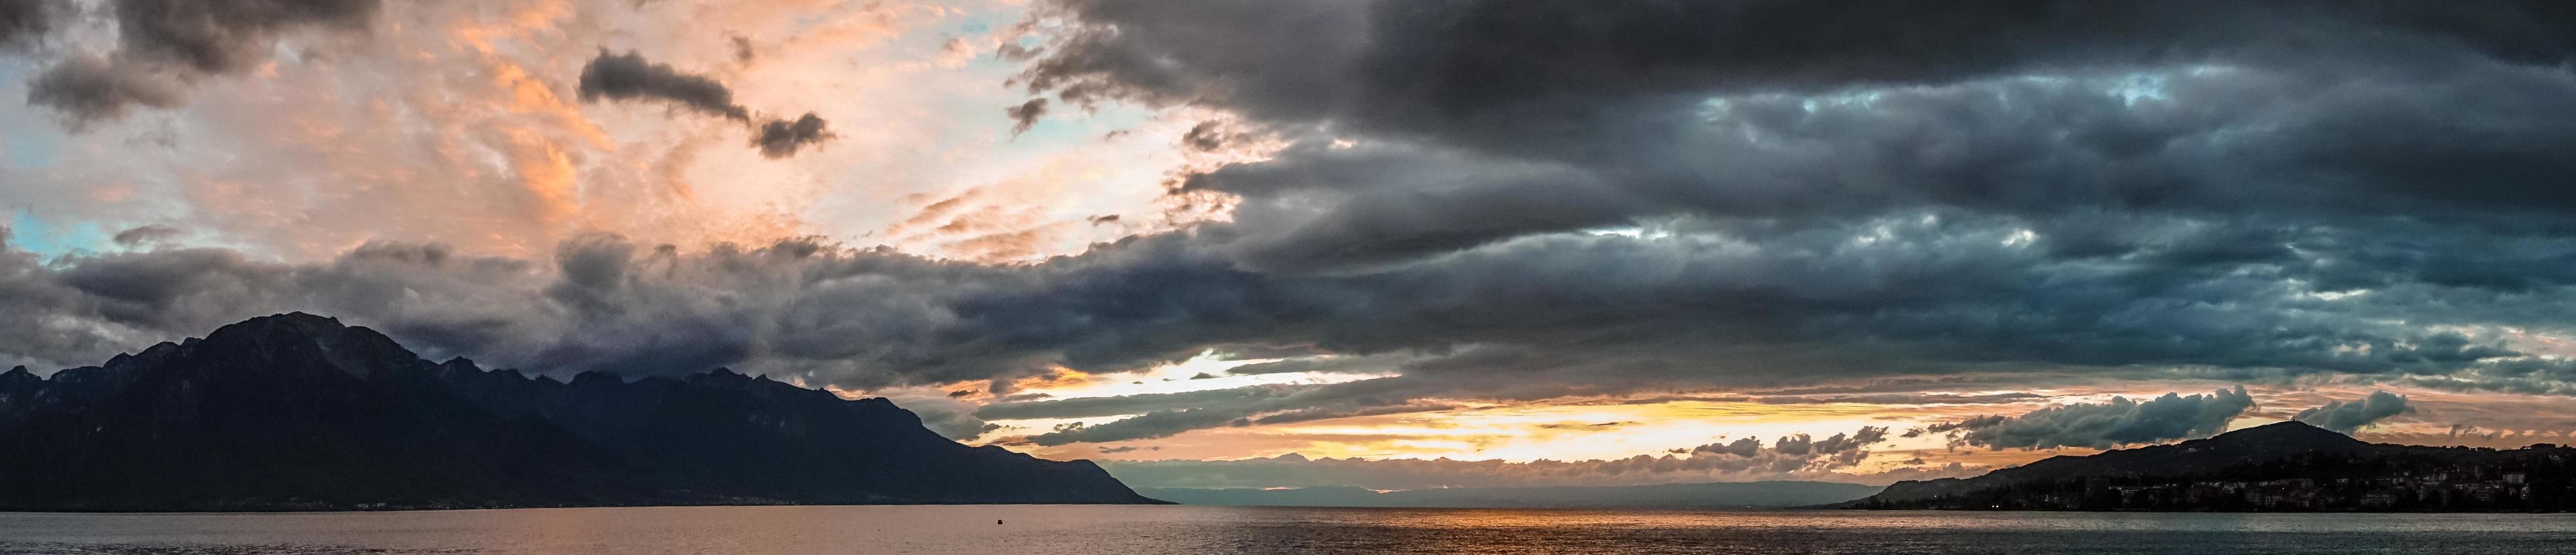 Sunset over Lake Geneva at Montreux photo